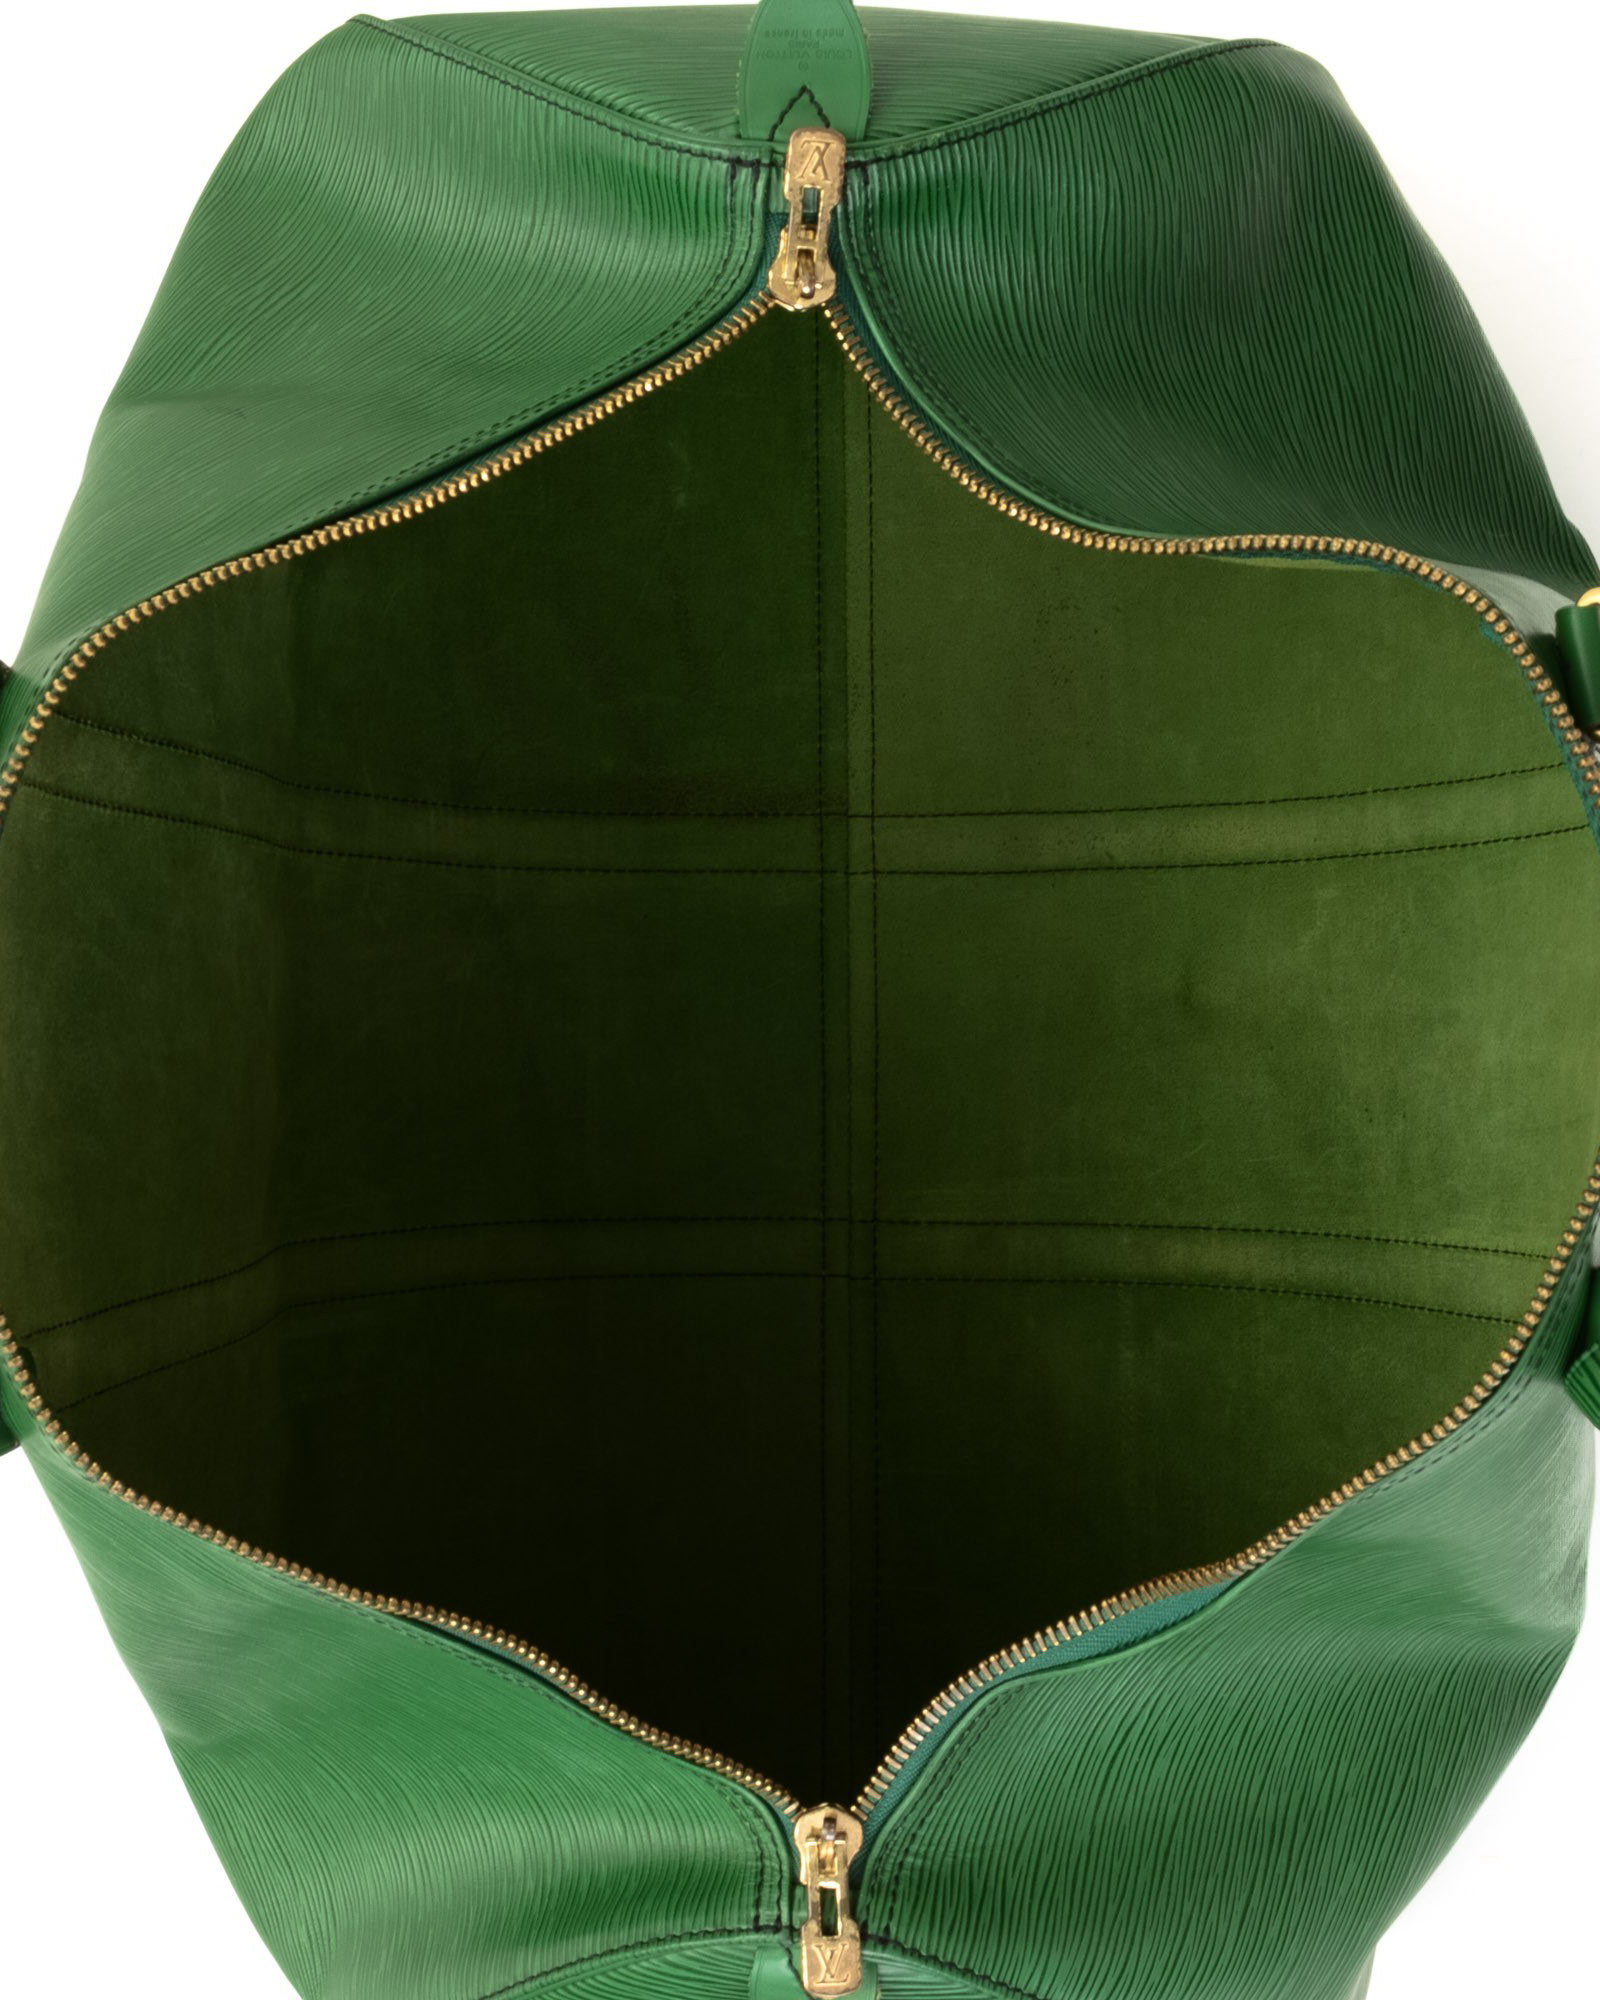 Lyst - Louis Vuitton Green Travel Bag - Vintage in Green